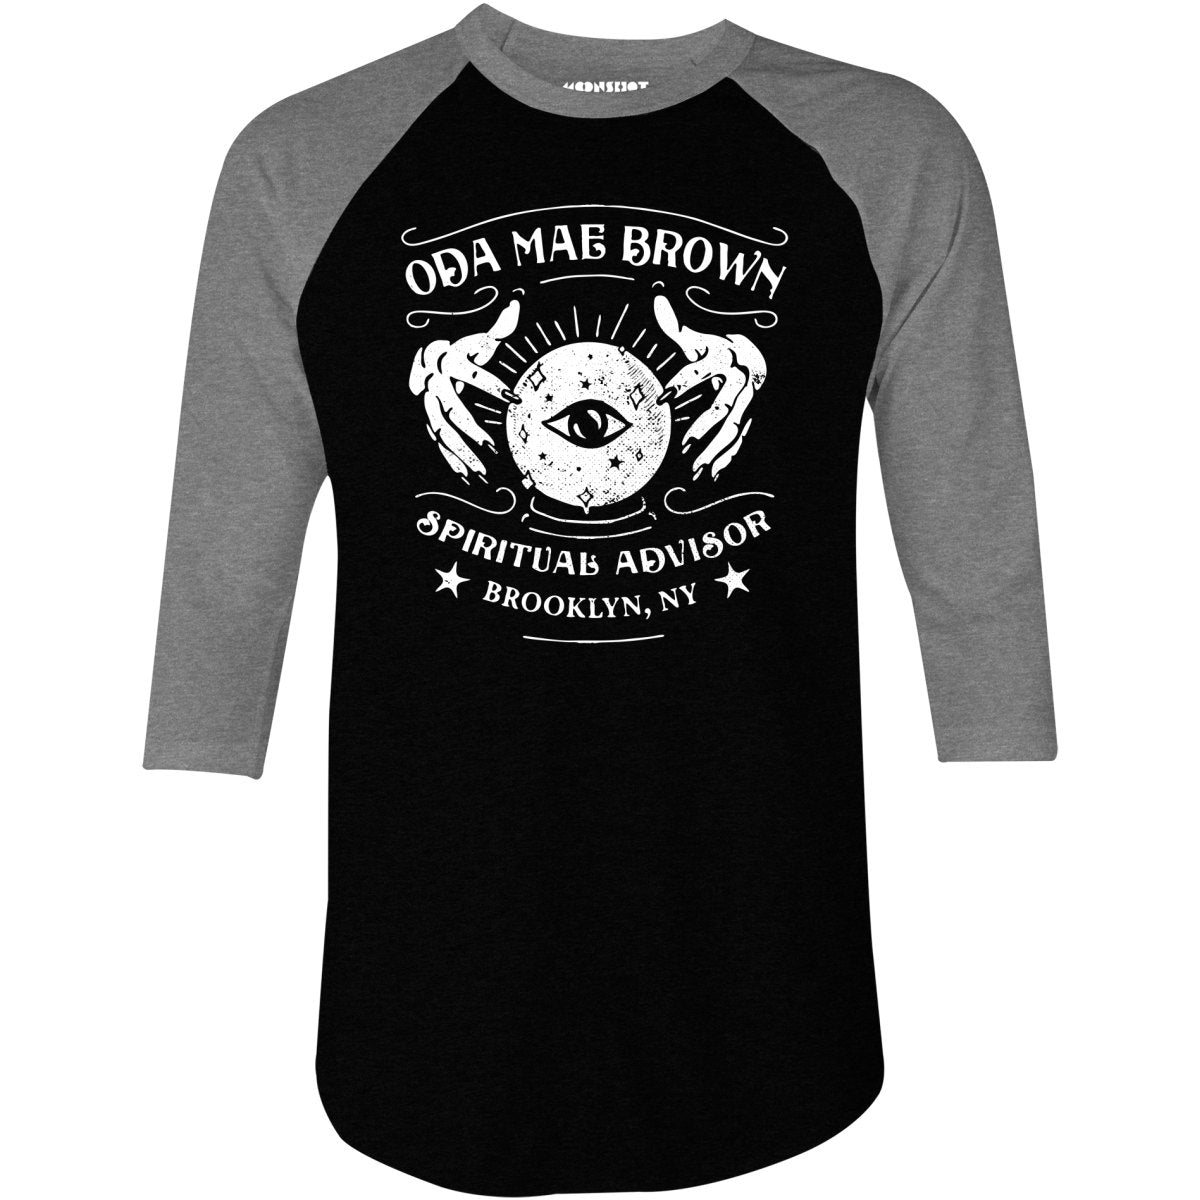 Ghost - Oda Mae Brown - Spiritual Advisor - 3/4 Sleeve Raglan T-Shirt